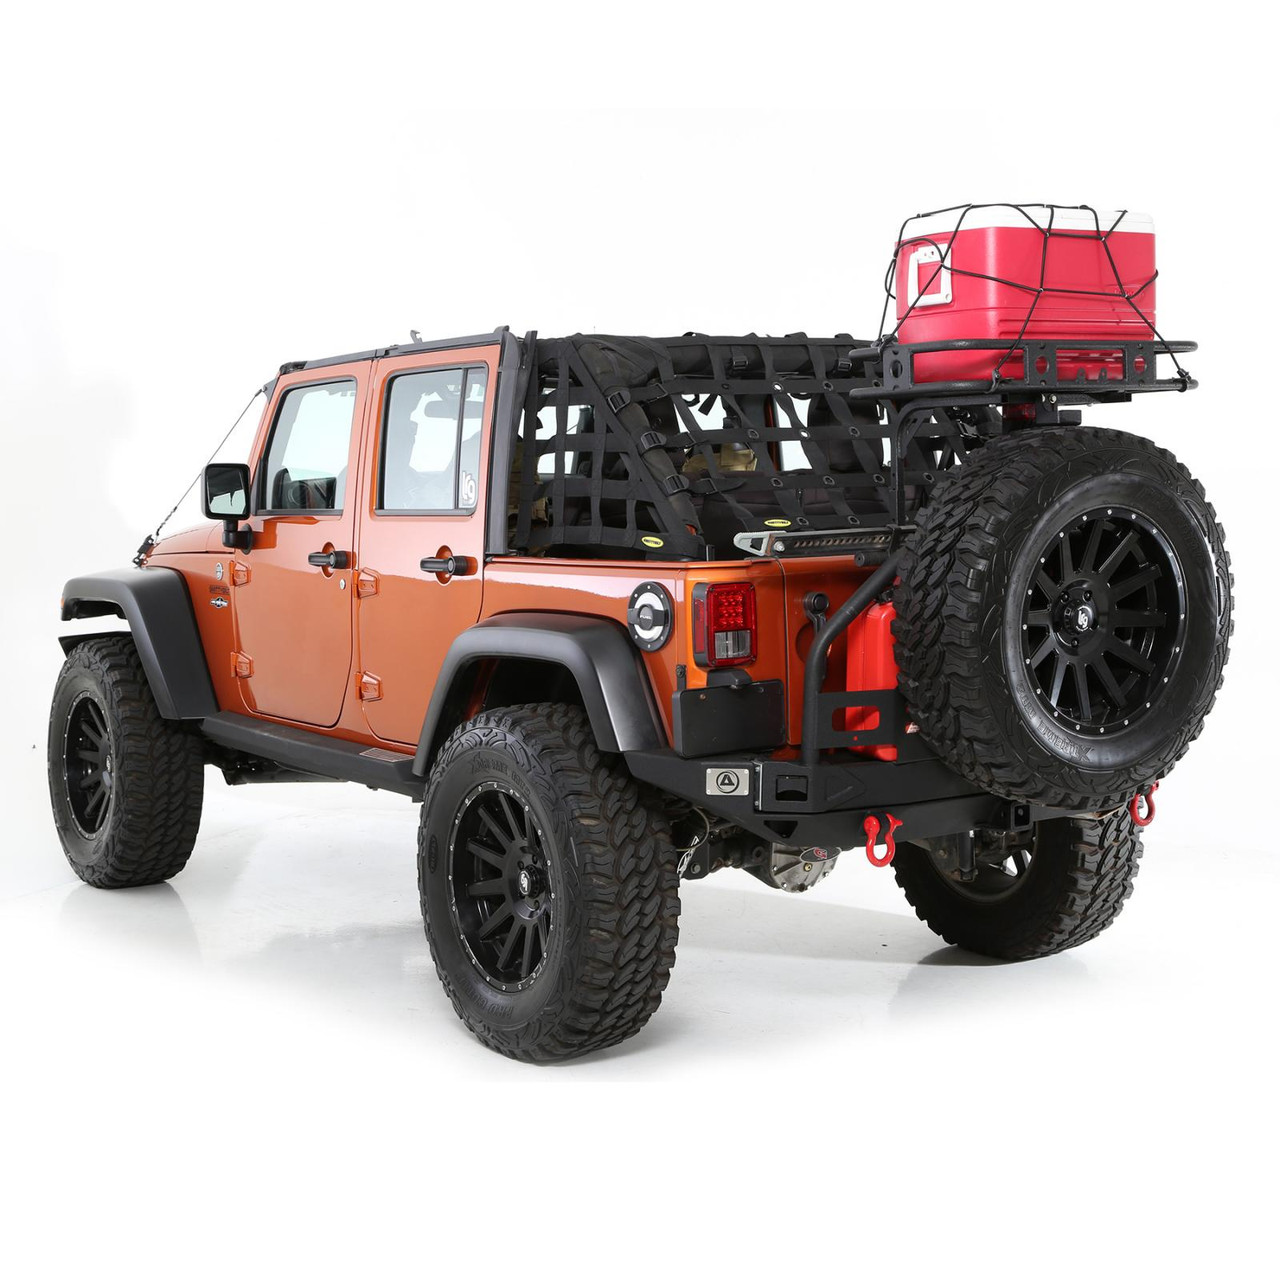 Jeep Wrangler TJ Molle Roll Bar Padding Cover Kit by Smittybilt - Black